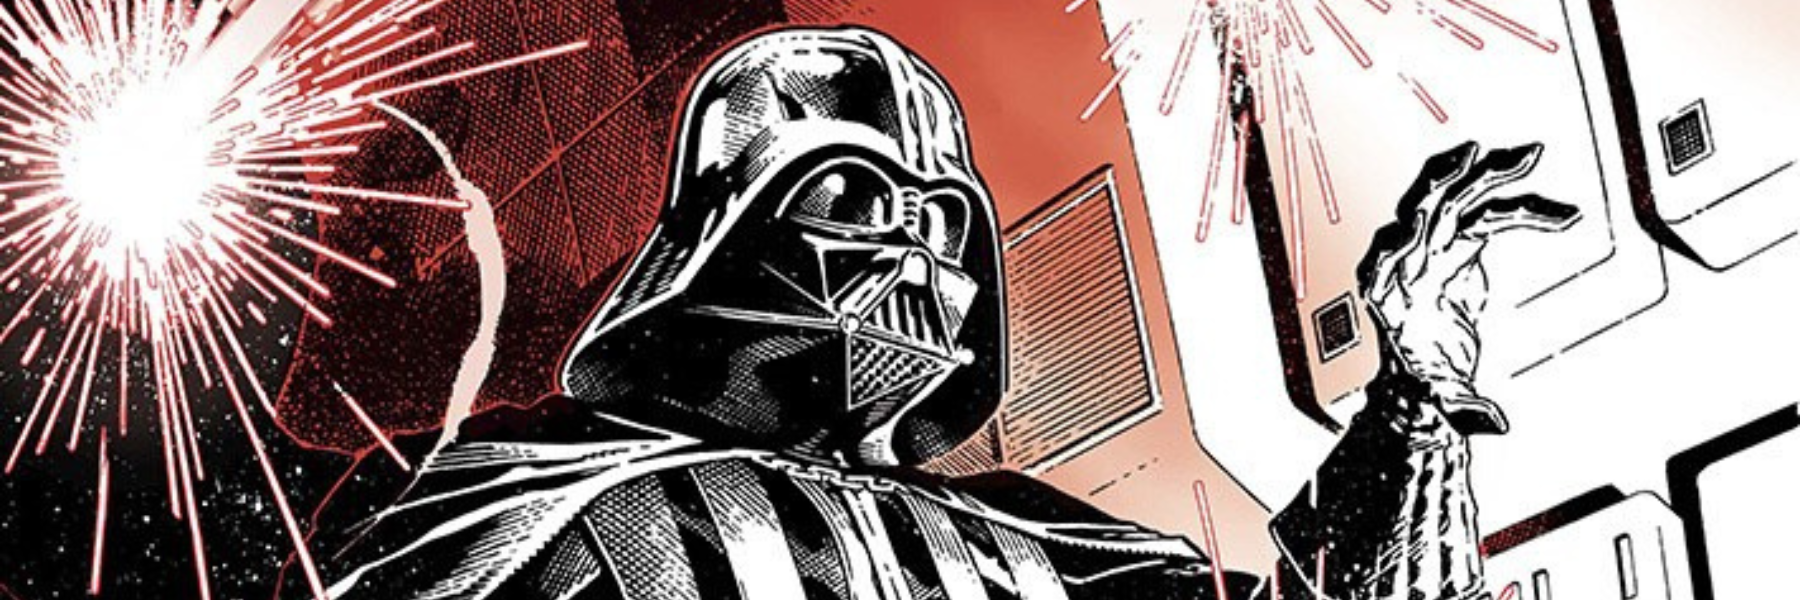 Darth Vader stars in new 'Black, White & Red' anthology in April